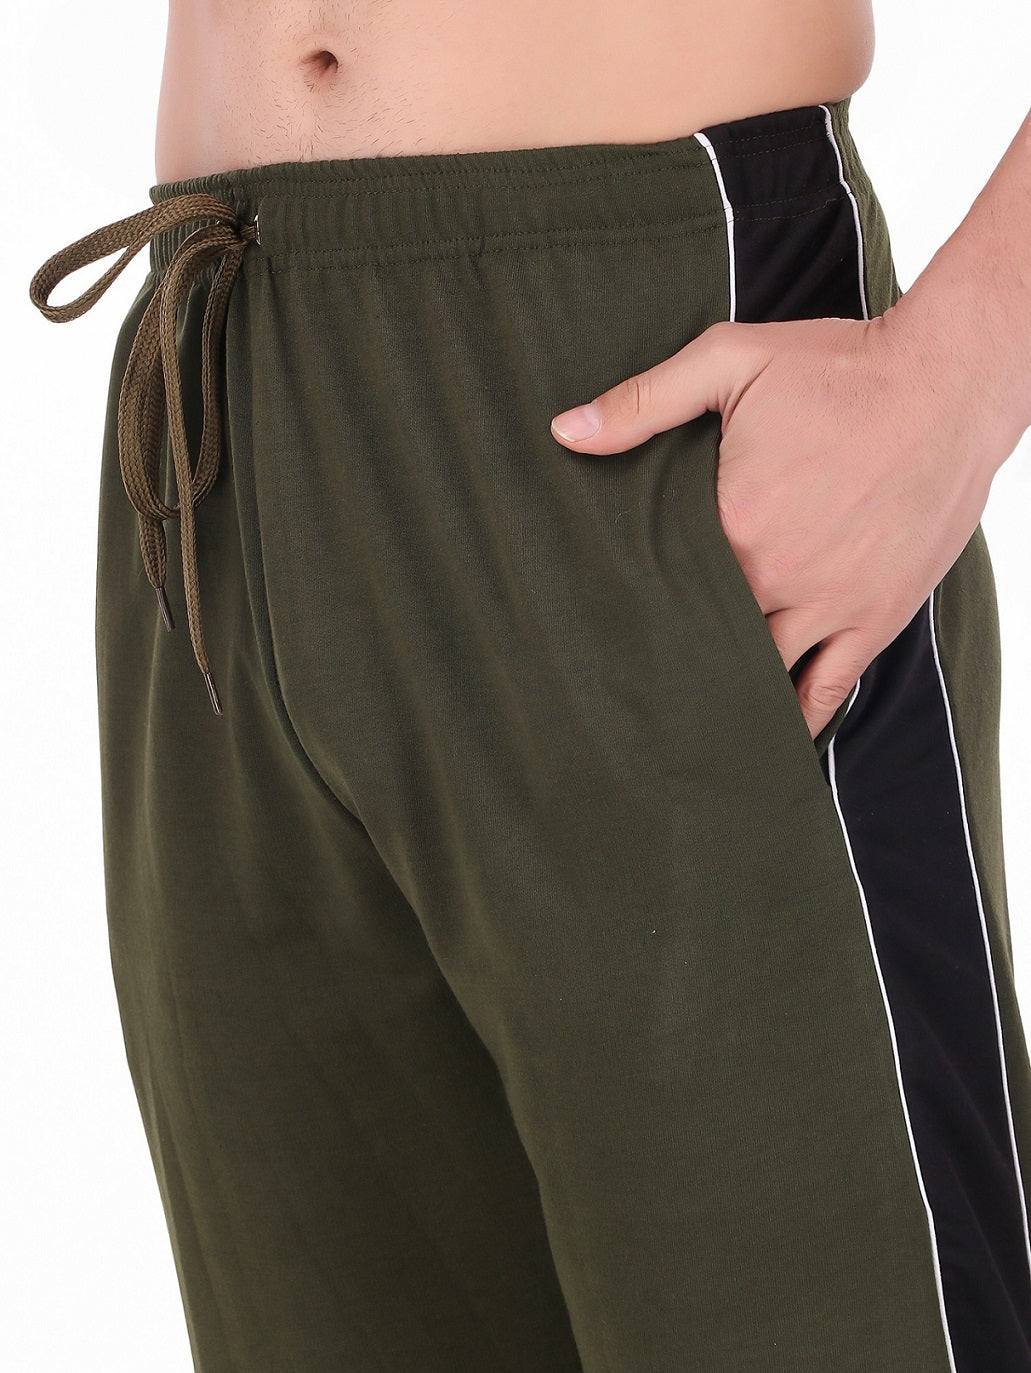 KZALCON Men's Regular Fit Track Pants